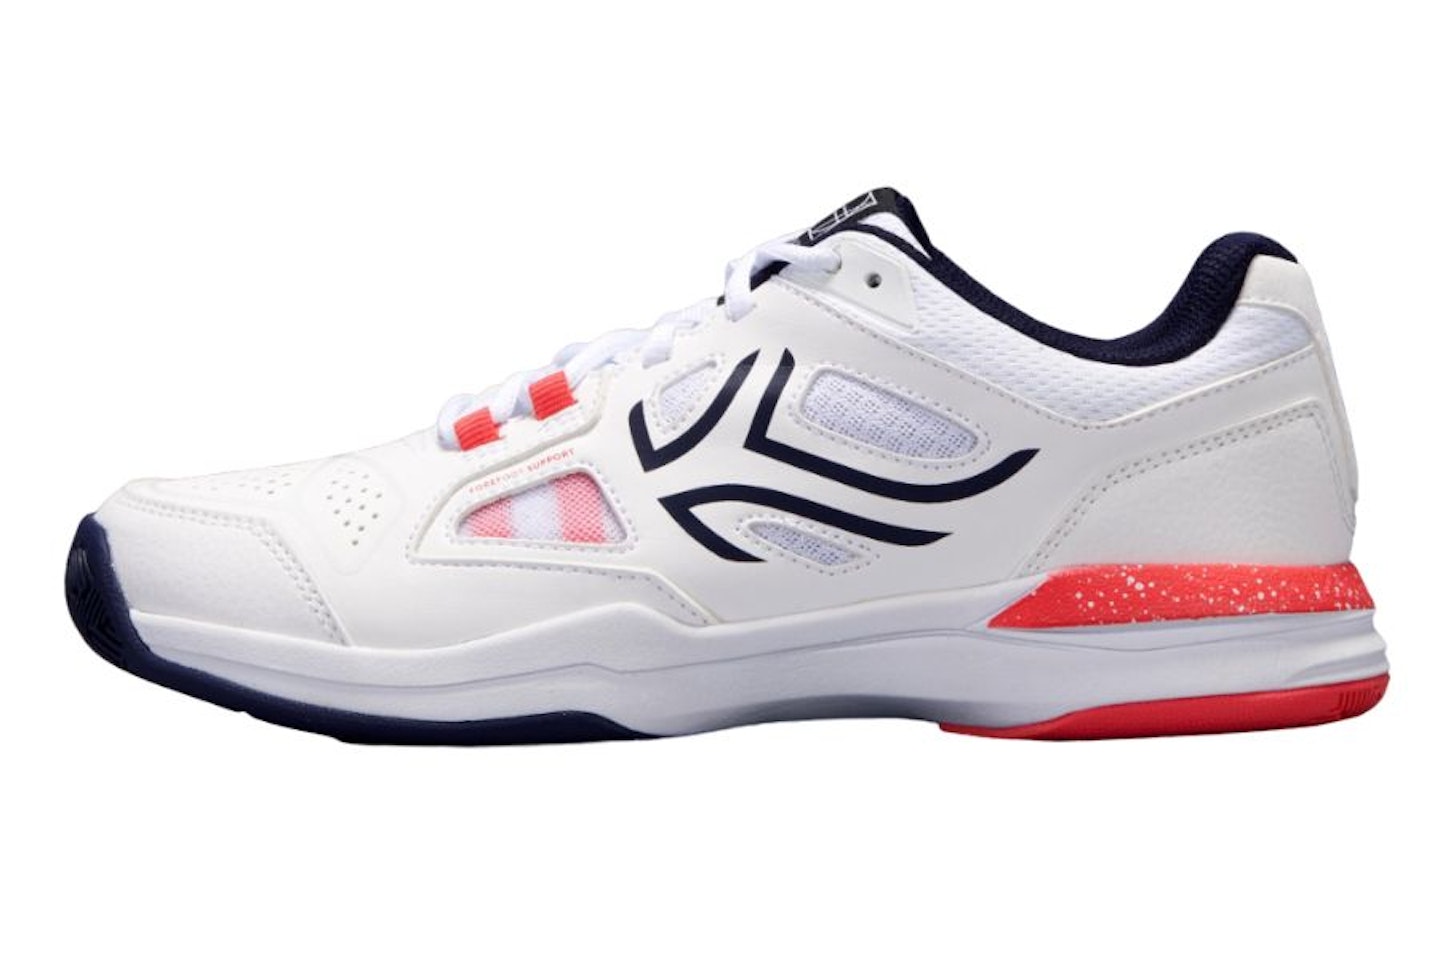 Decathlon Women's Tennis Shoes TS500